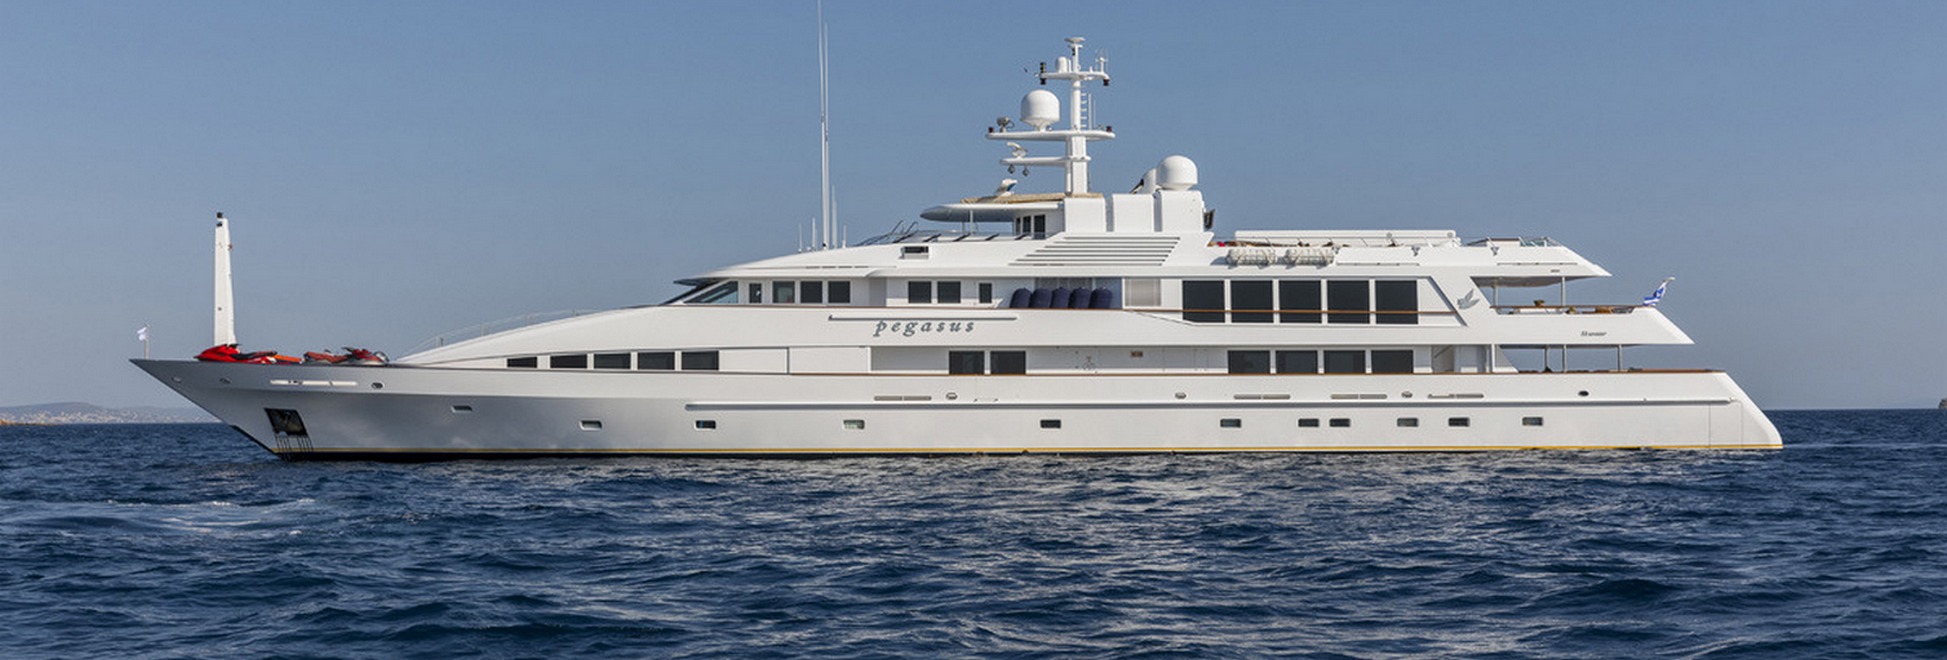 pegasus charter yacht